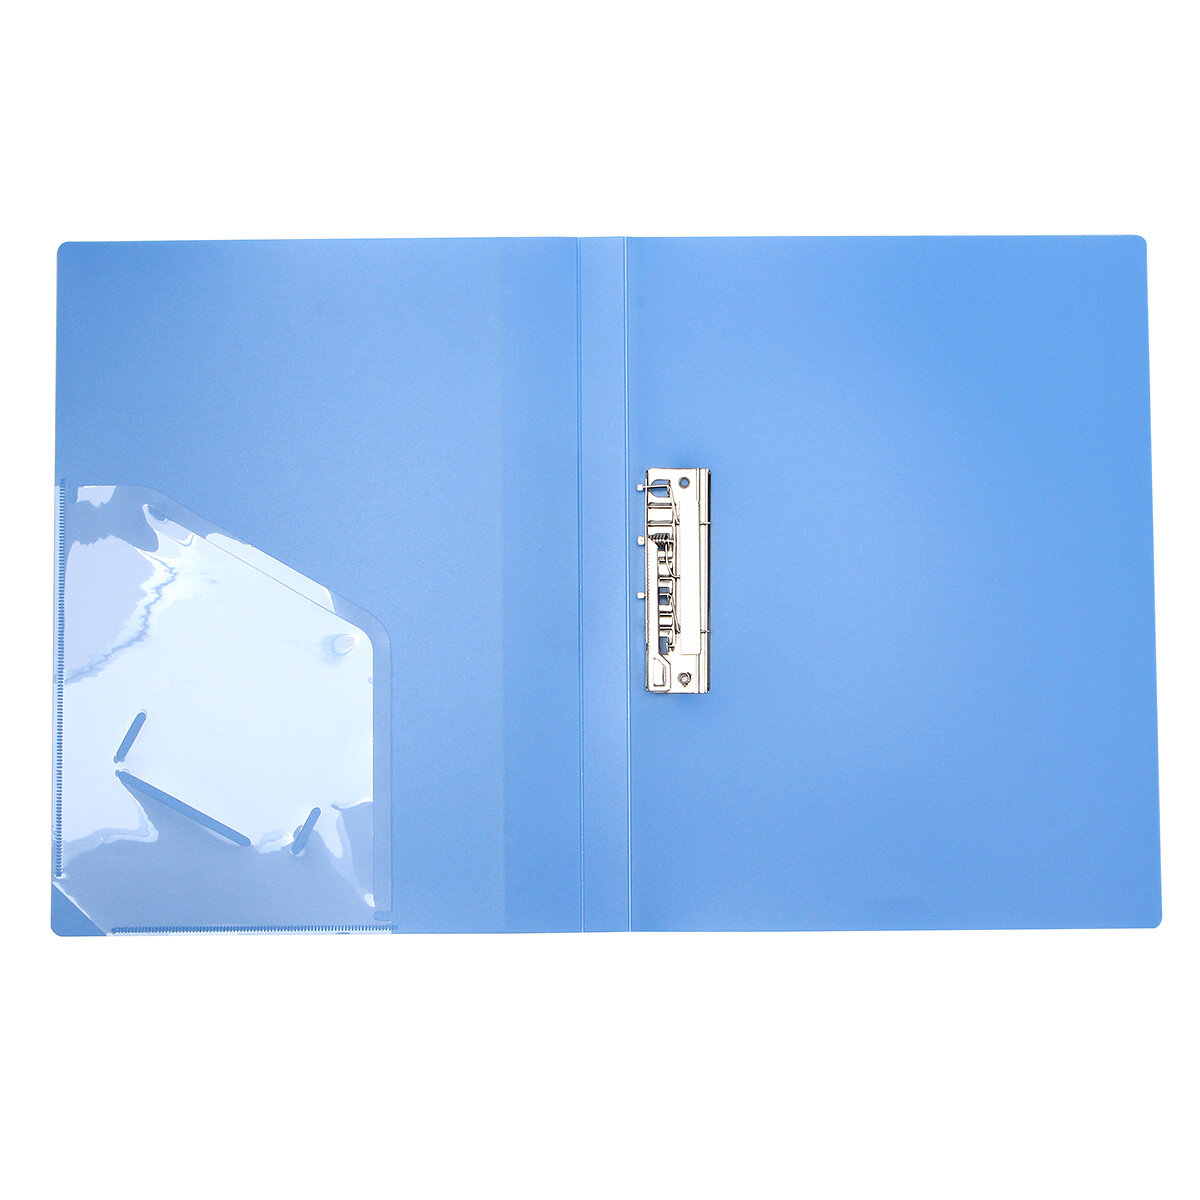 UMI A4 Paper File Organization Folder Cover Holder Document Office School Supplies COD